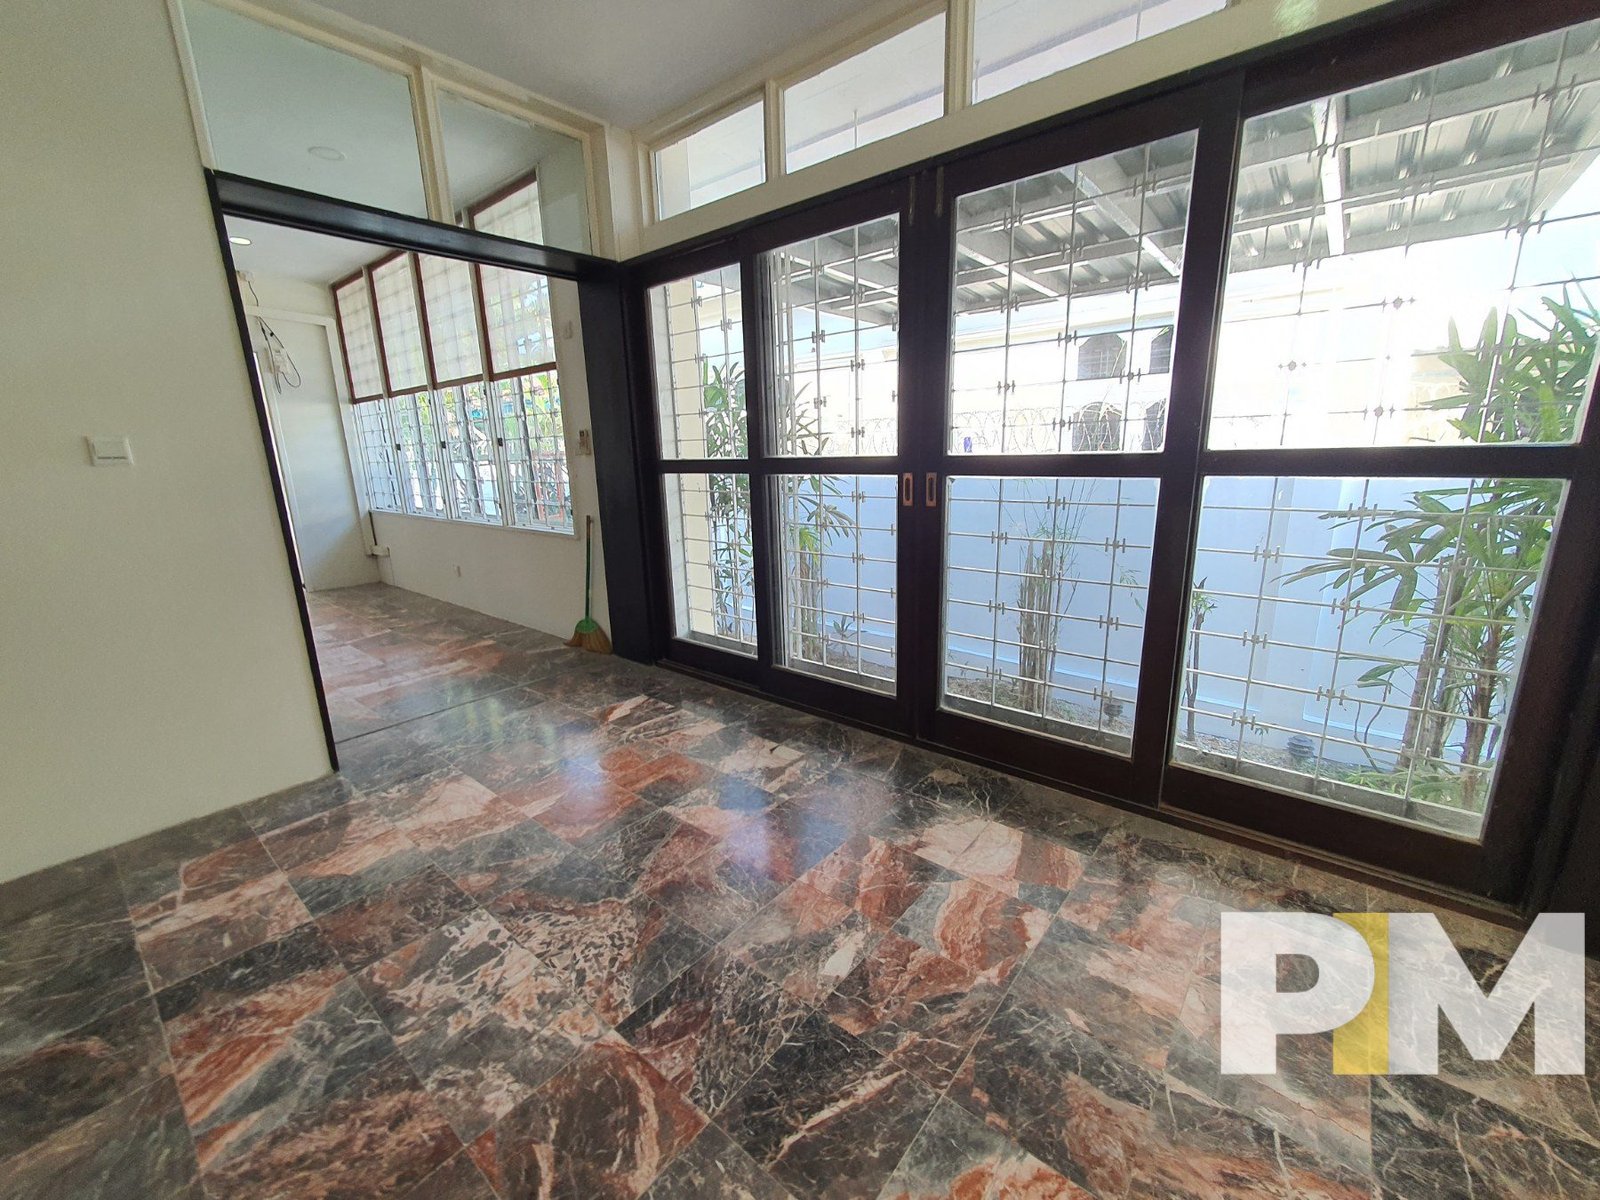 room with corridor - Yangon Real Estate